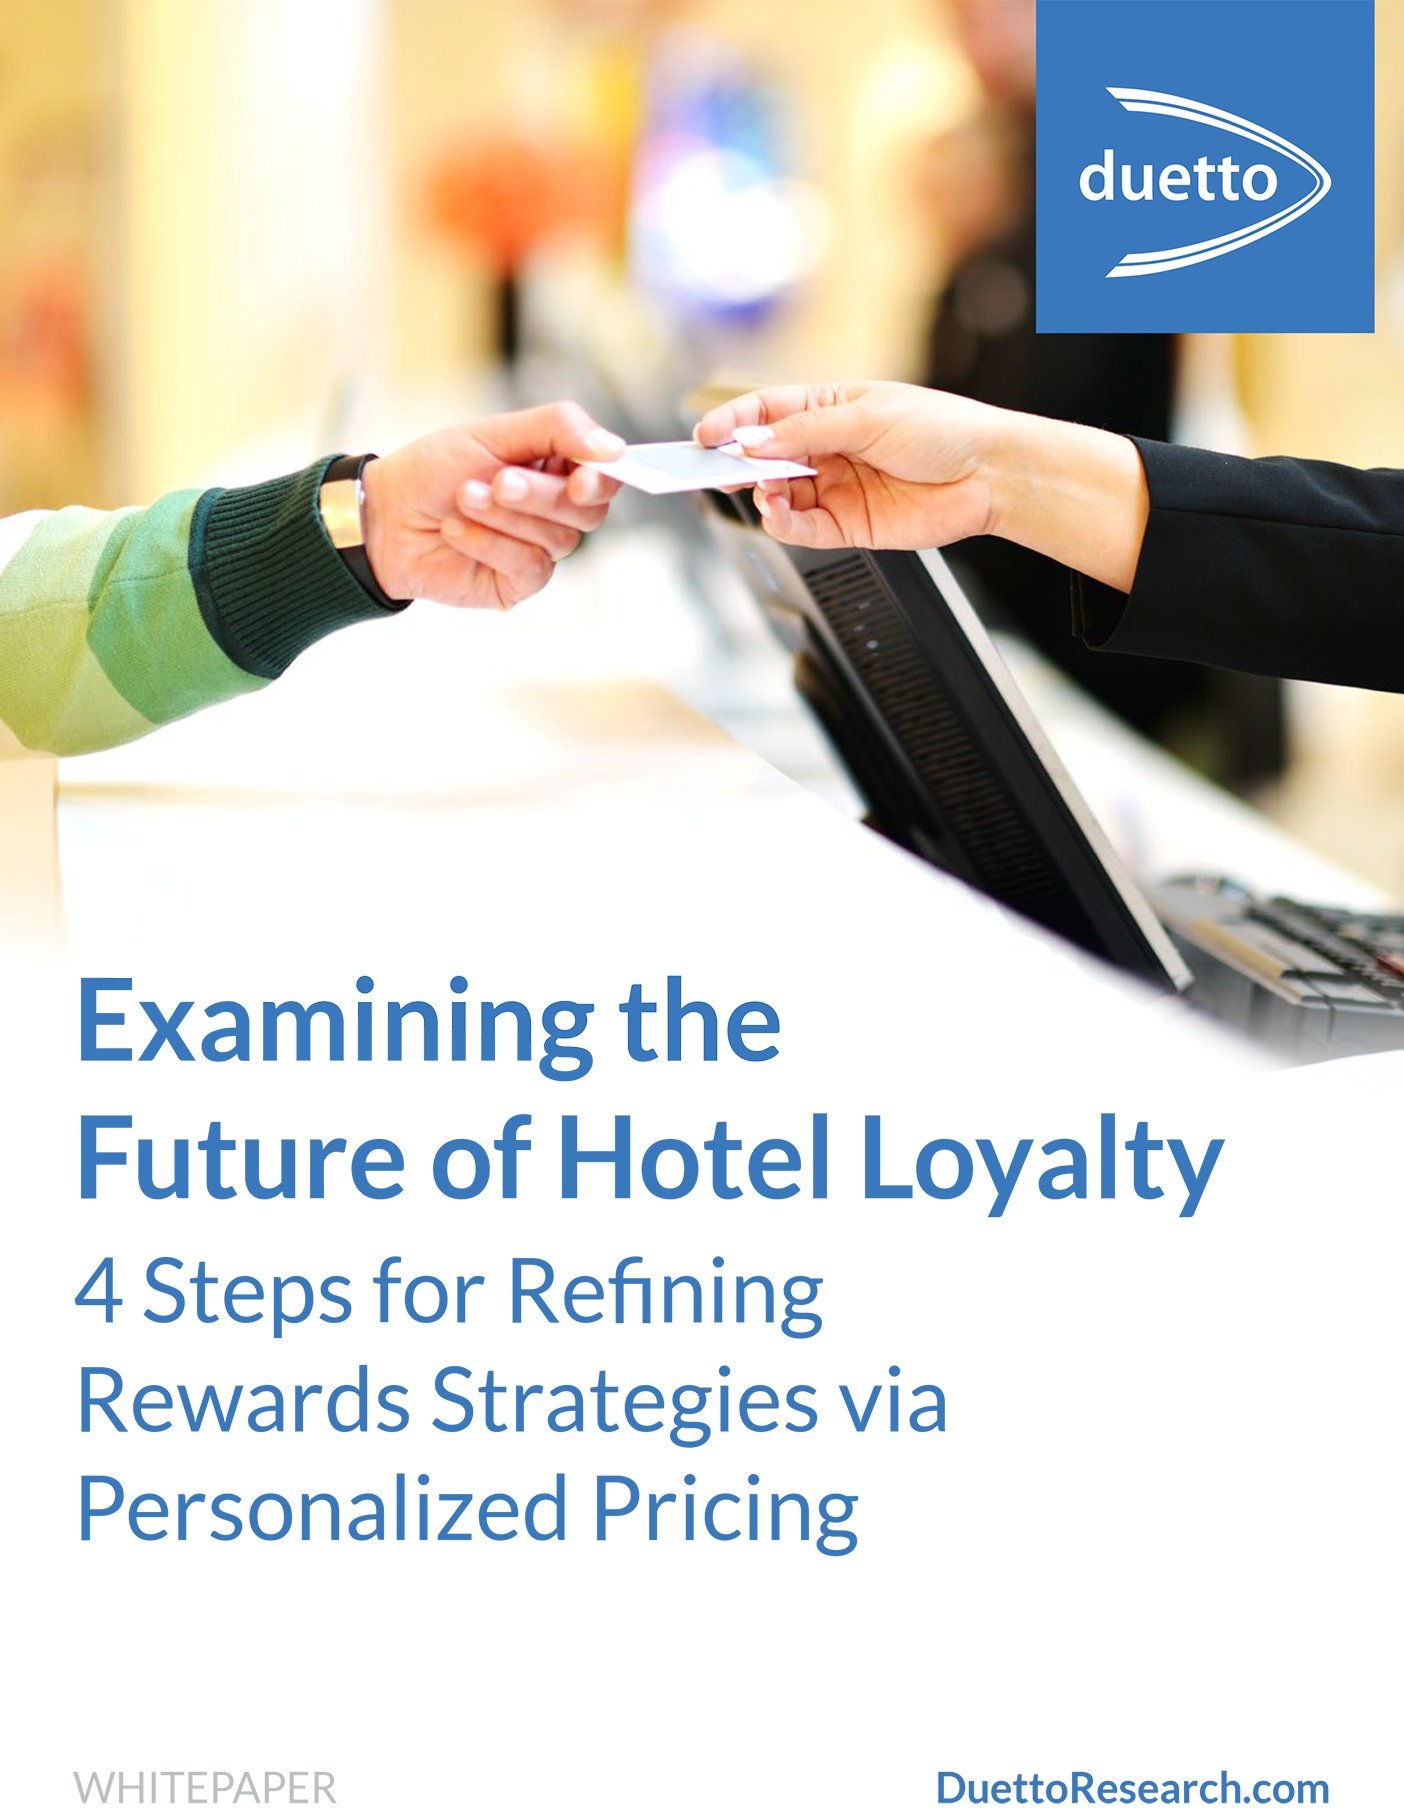 1_Examining the Future of Hotel Loyalty.jpg